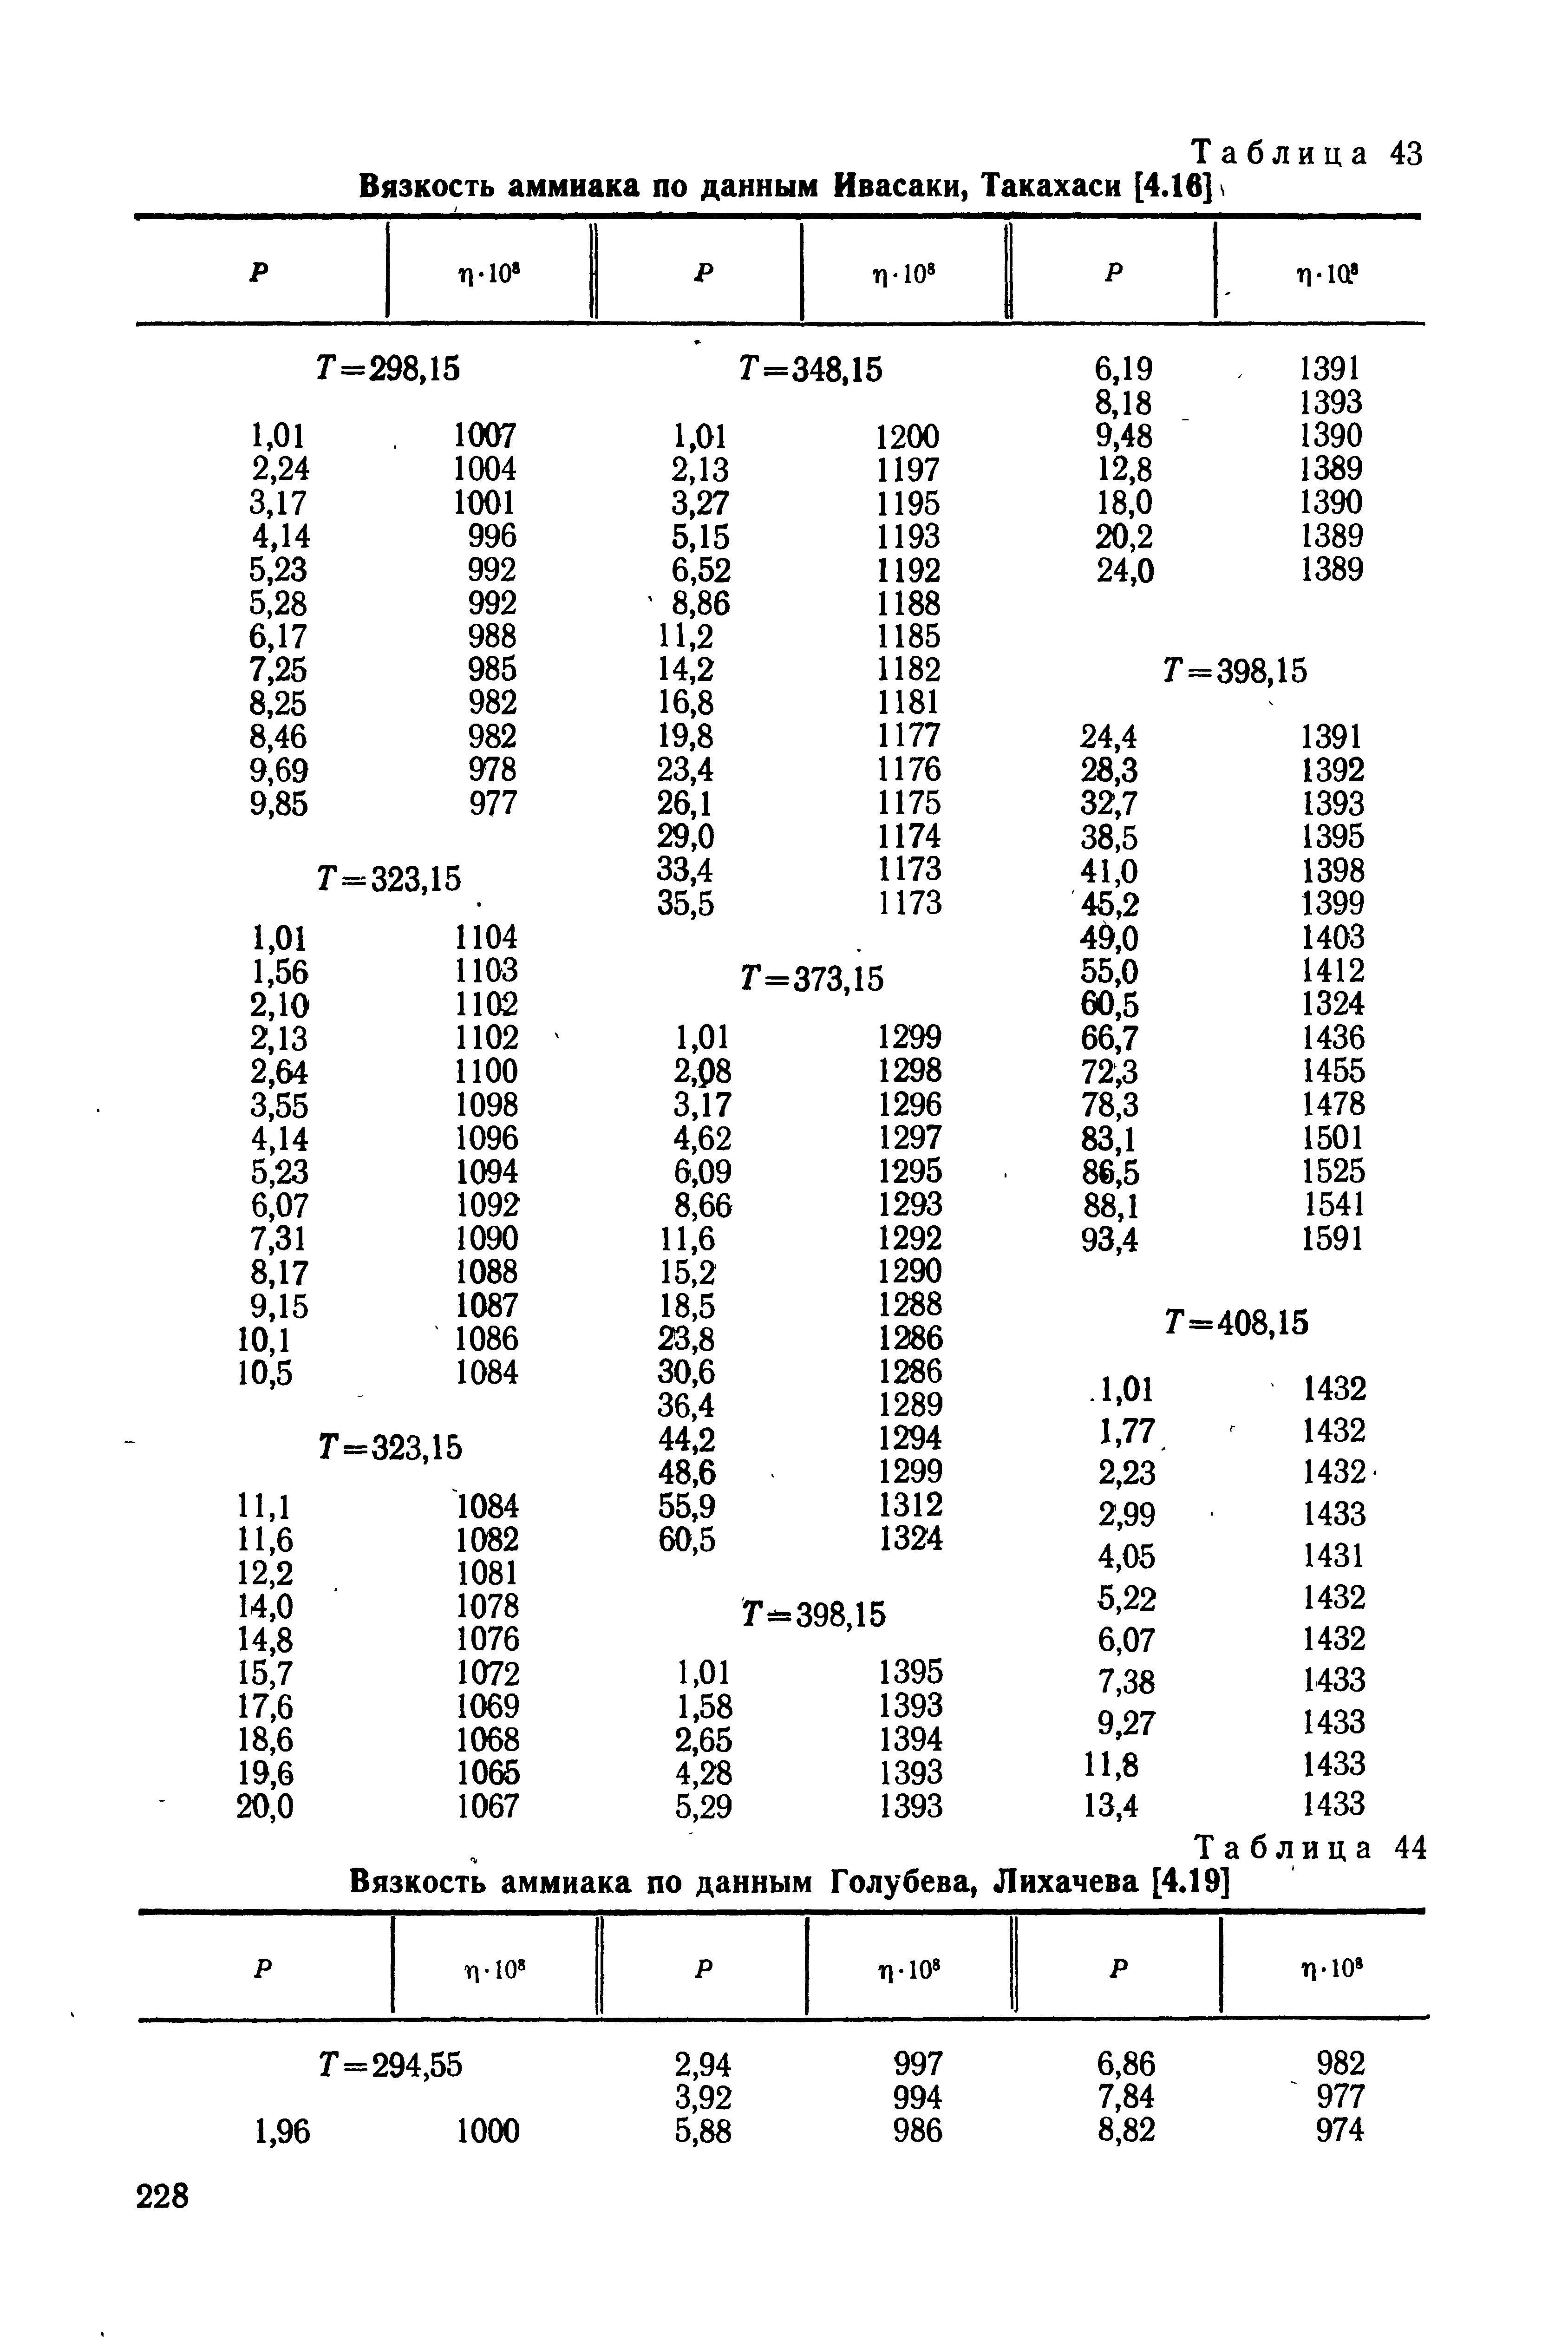 Таблица 44 Вязкость аммиака по данным Голубева, Лихачева [4Л9]
